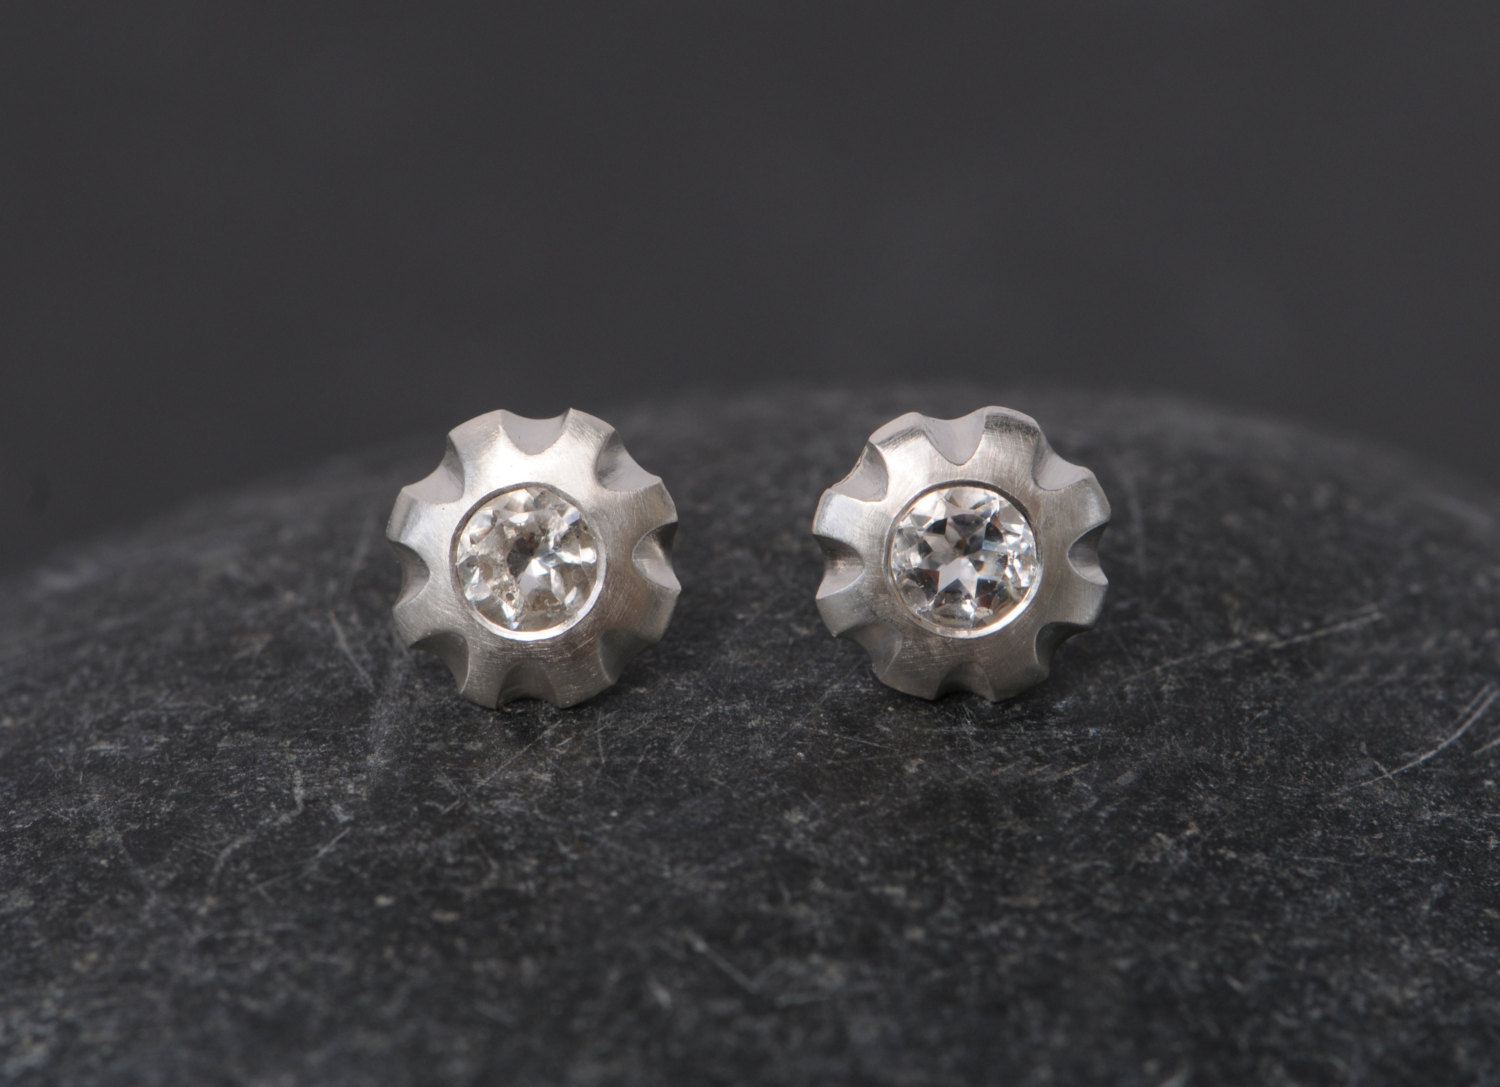 Simple White topaz flower earrings, set in sterling silver. Earrings 10mm across, stones 5mm across. Designed and handmade by William White in Cornwall, UK